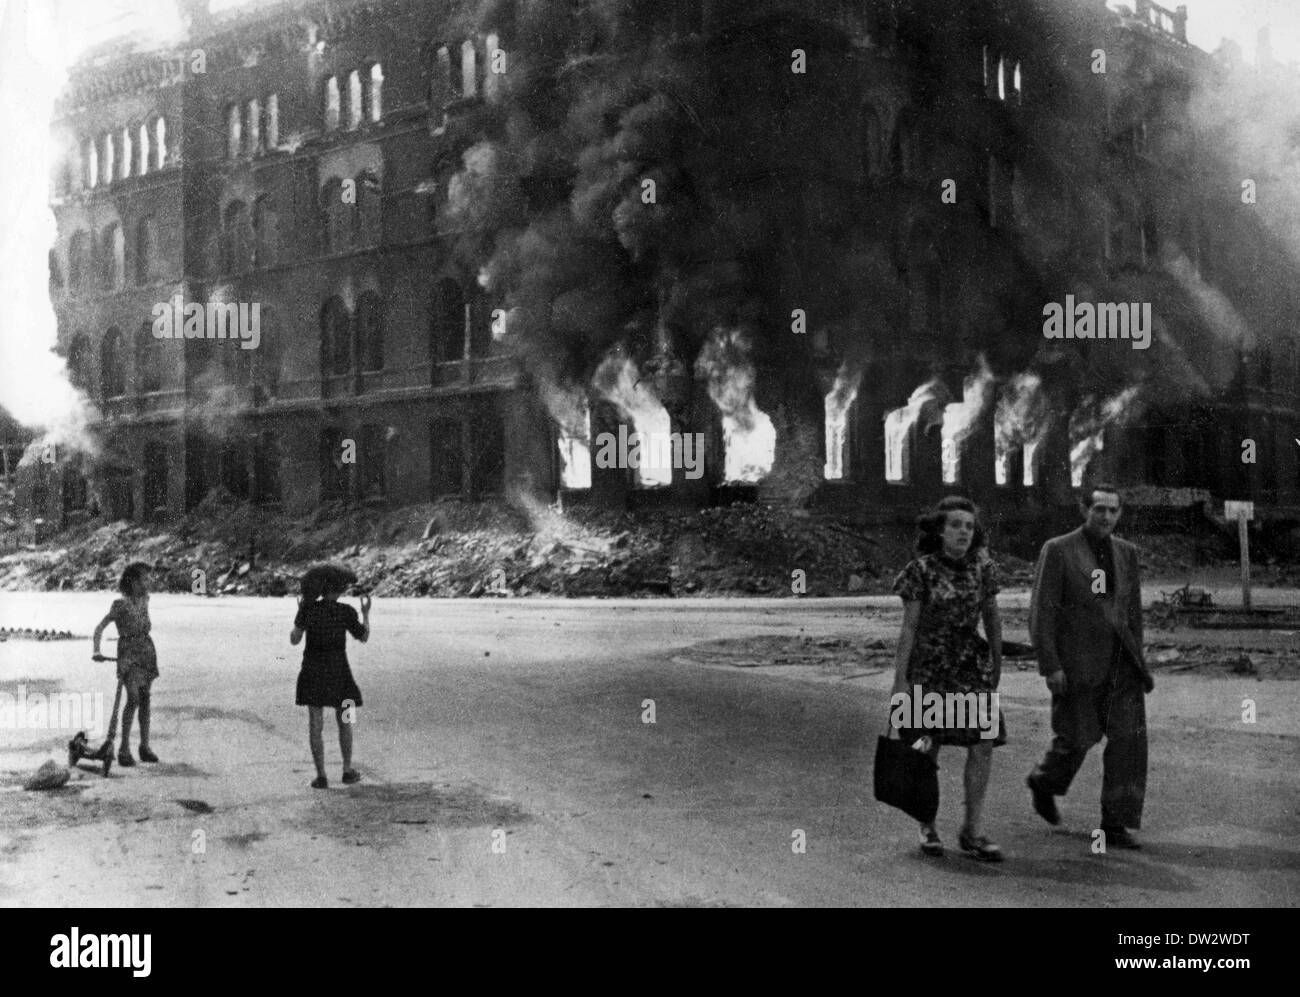 End of the war in Berlin 1945 - View of a burning house on Dircksenstrasse near Alexanderstrasse Street in the Mitte district of Berlin. Fotoarchiv für Zeitgeschichtee - NO WIRE SERVICE Stock Photo